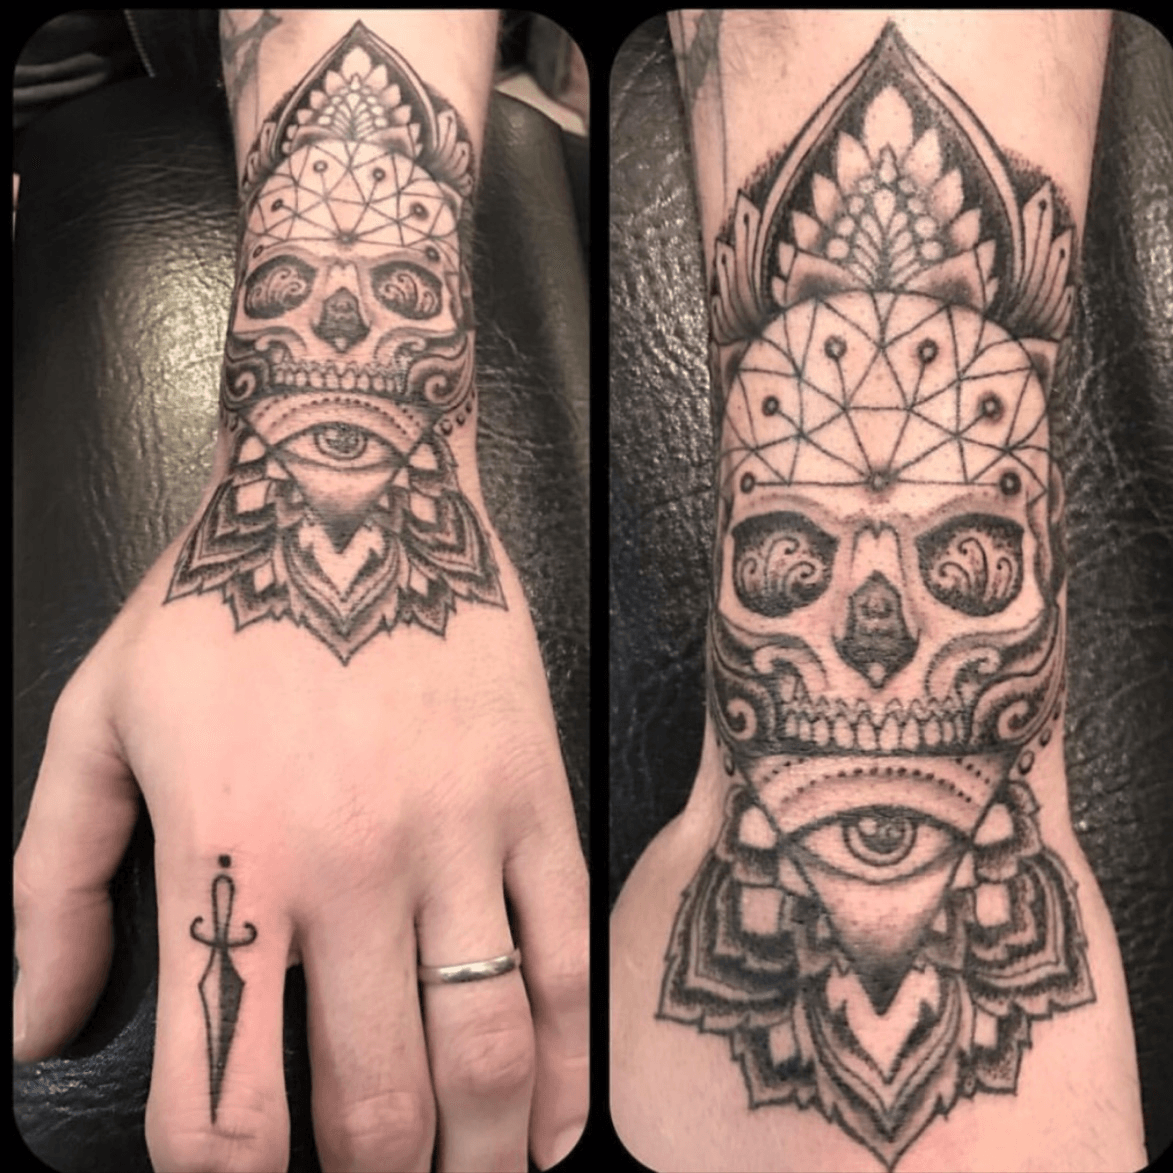 Tattoo uploaded by Inborn Brooklyn  Hand tattoo on jewelry designer  mhartdesigns skull handtattoo seeingeye eye dagger wrist  Tattoodo